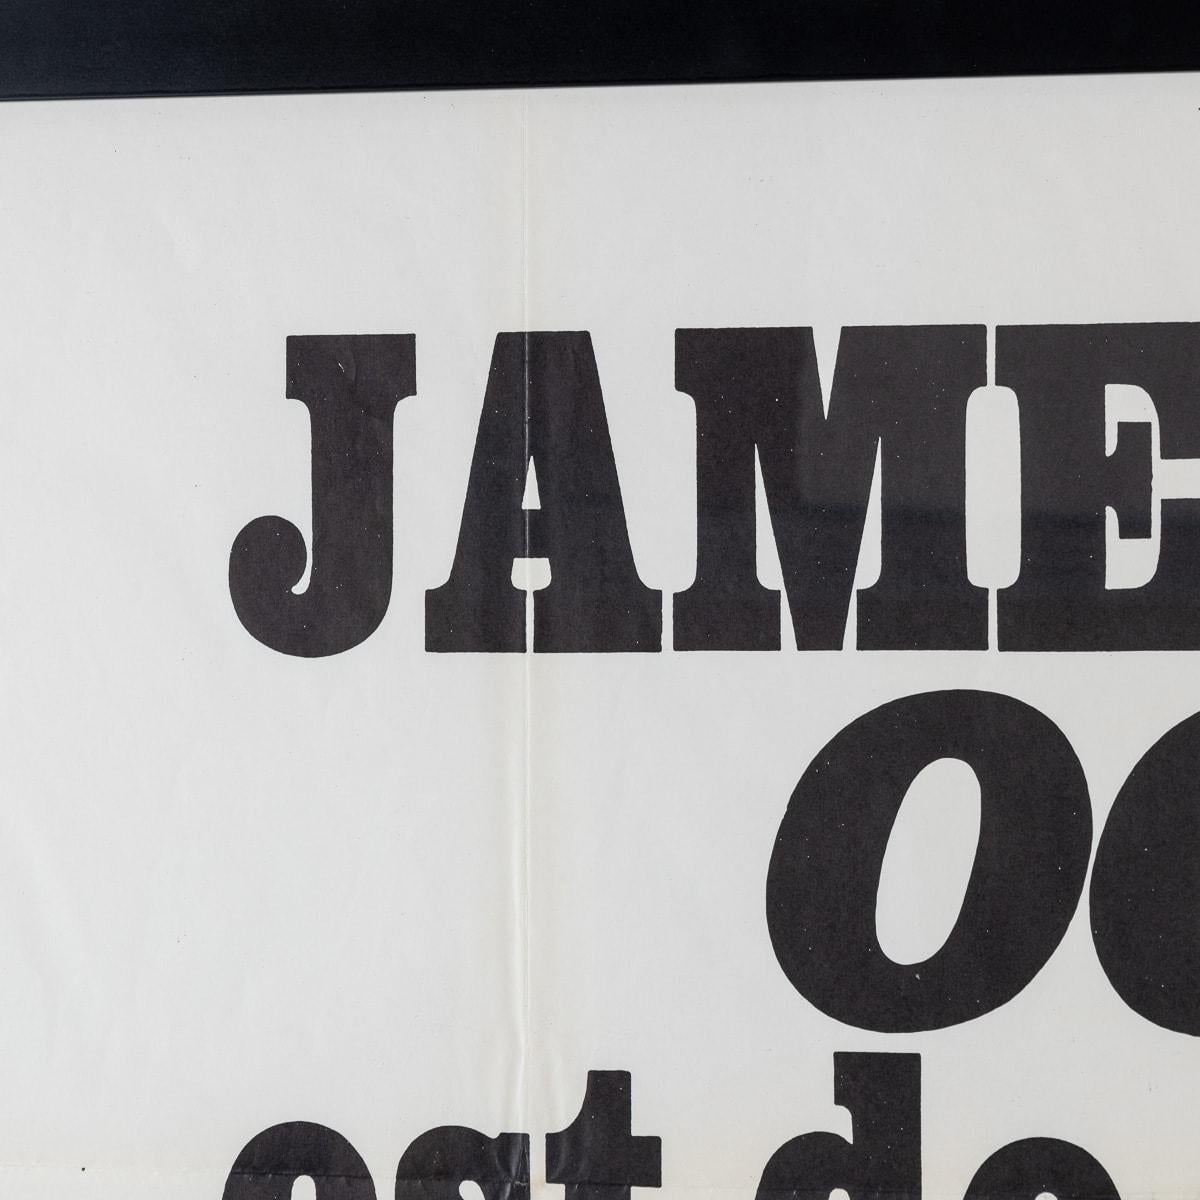 Original French Release James Bond On Her Majesty's Secret Service Poster c.1969 For Sale 10